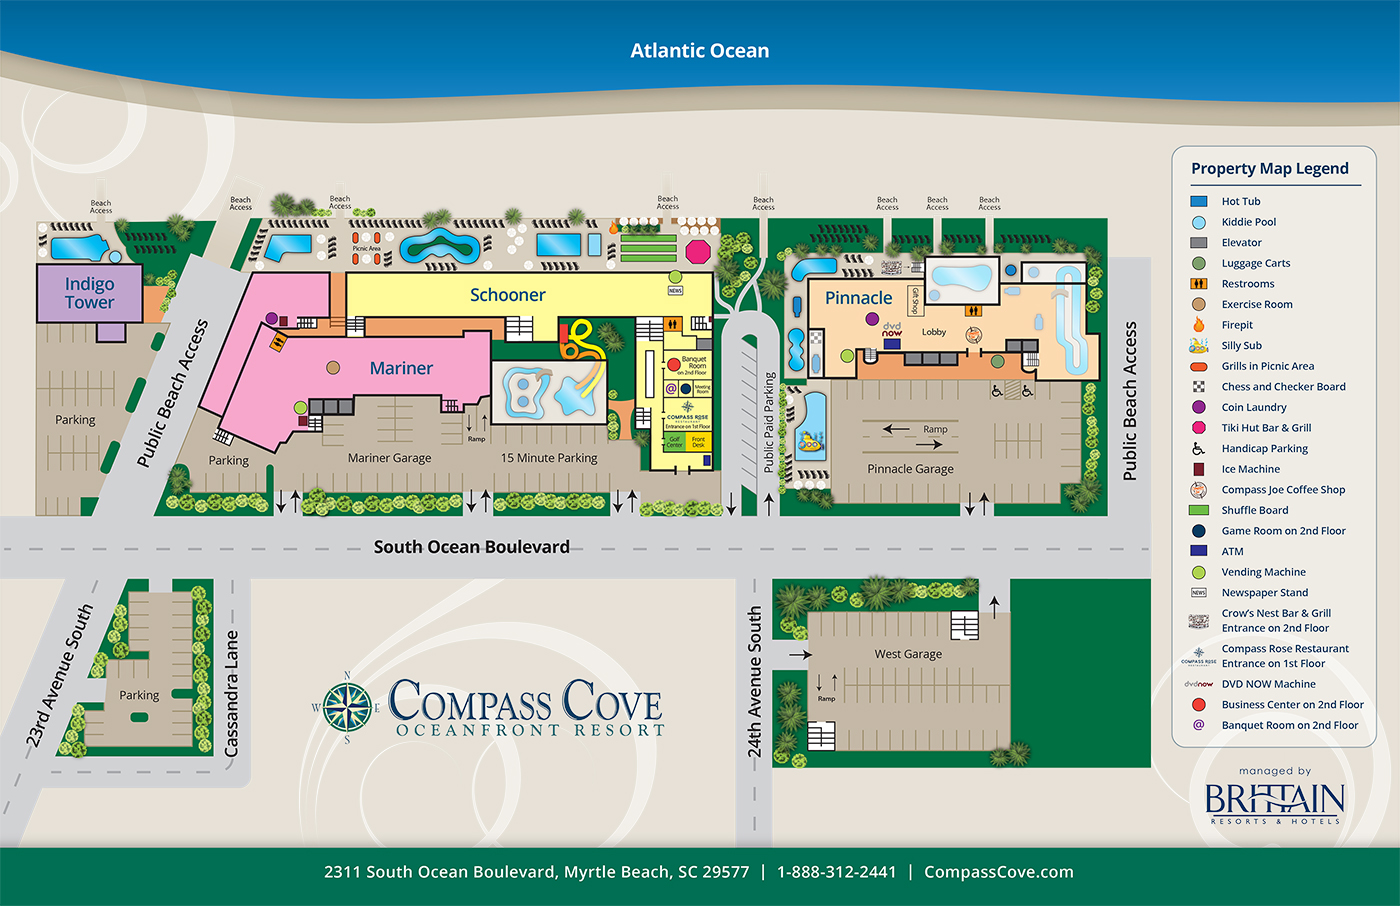 Compass Cove Resort Pinnacle Tower, Myrtle Beach Resort Condos